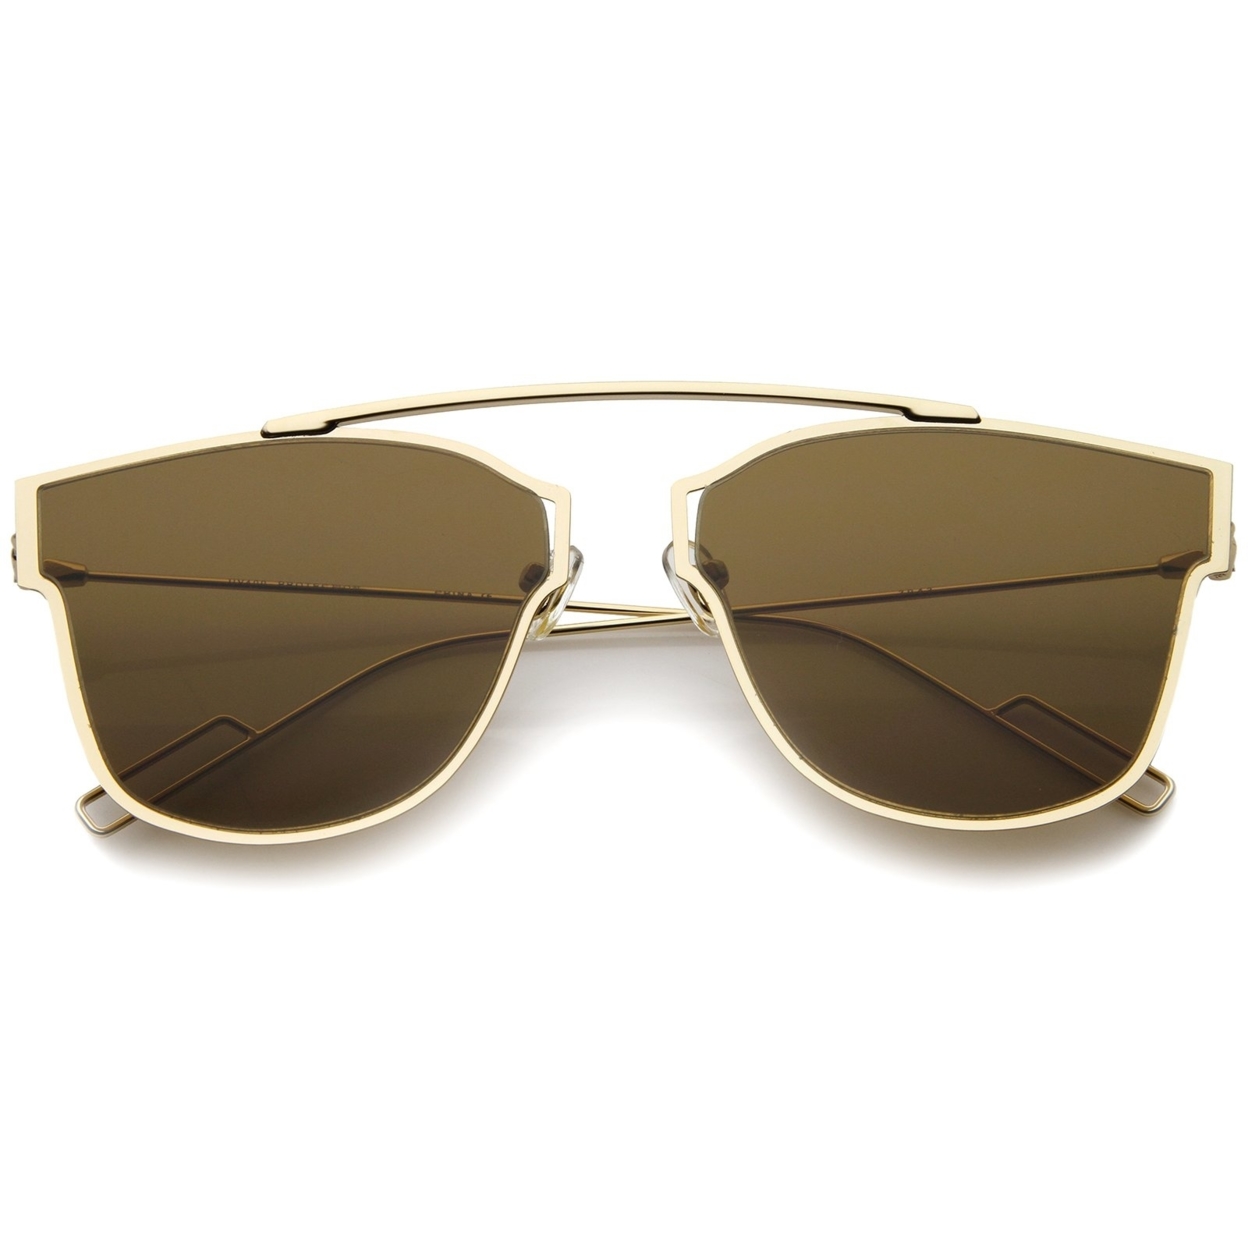 Modern Fashion Ultra Thin Open Metal Minimalist Pantos Aviator Sunglasses 55mm - Gunmetal /Blue